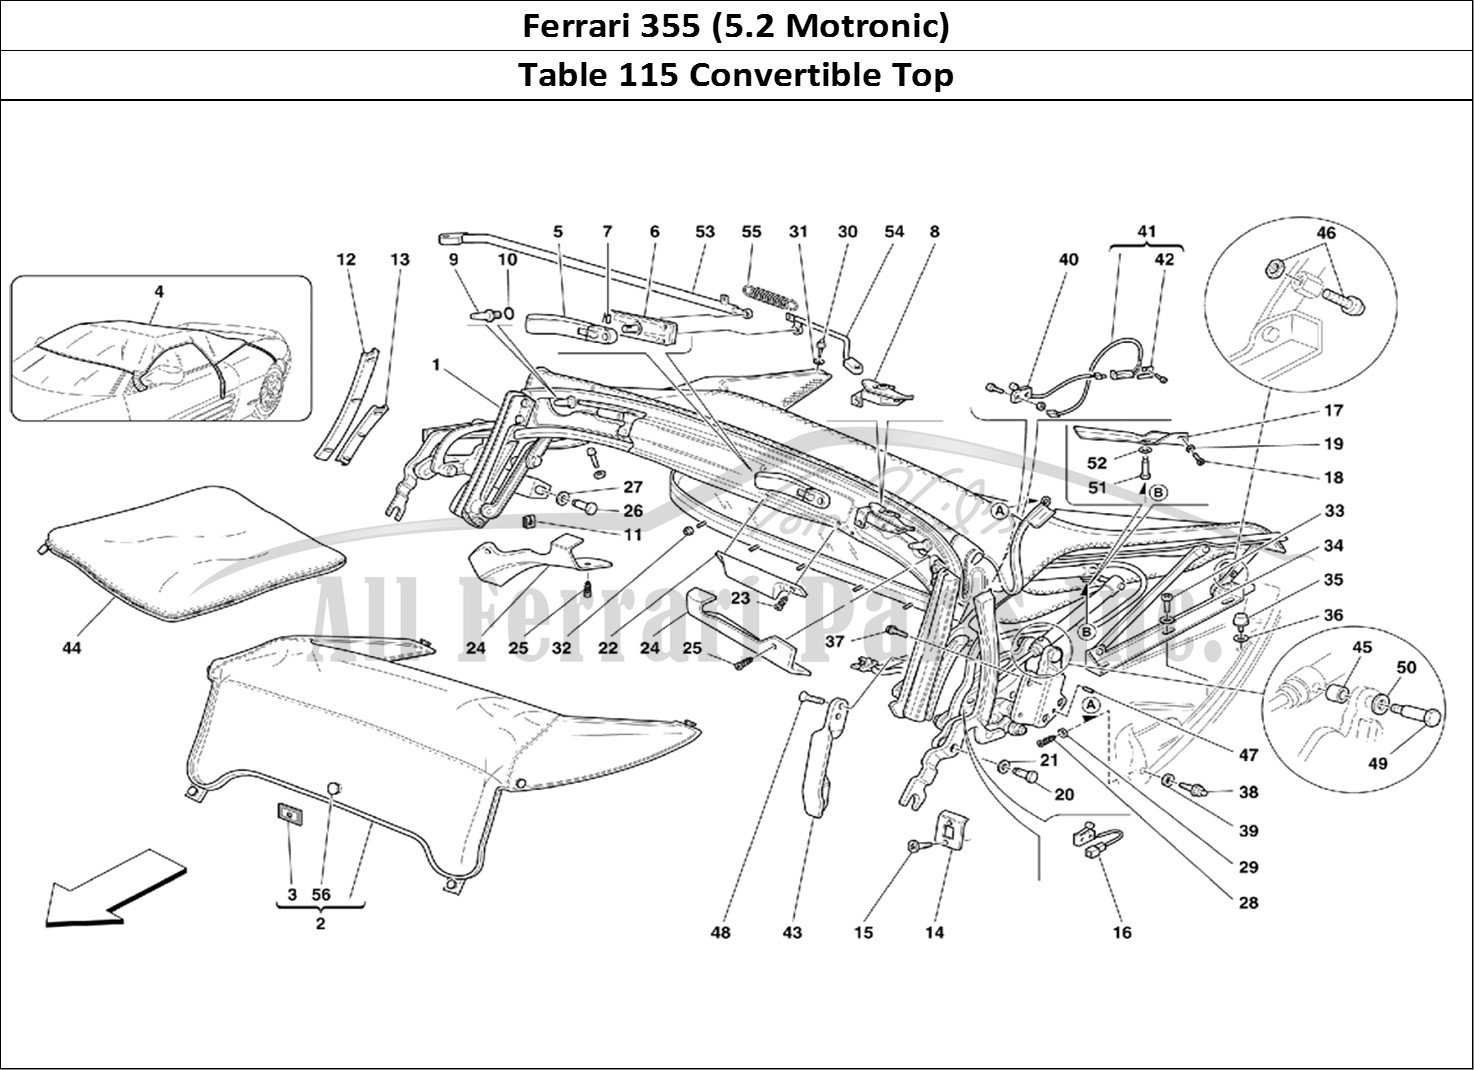 Ferrari Parts Ferrari 355 (5.2 Motronic) Page 115 Top -Valid for Spider